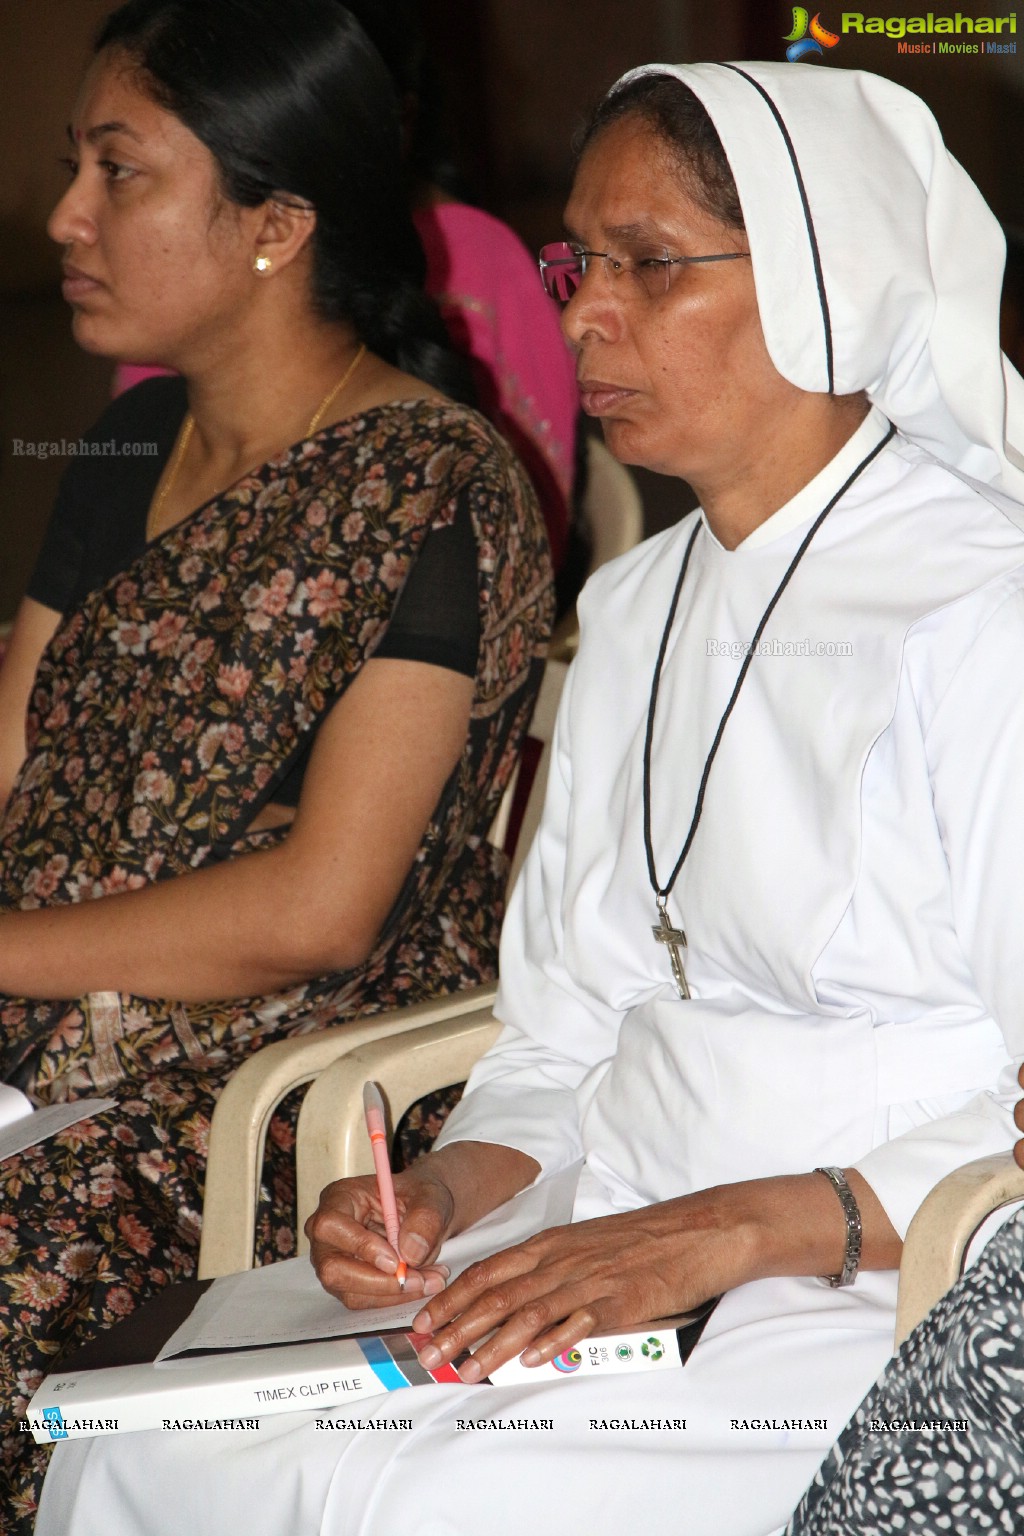 St. Francis College for Women UGC sponsored National Seminar  (Feb. 9, 2013)